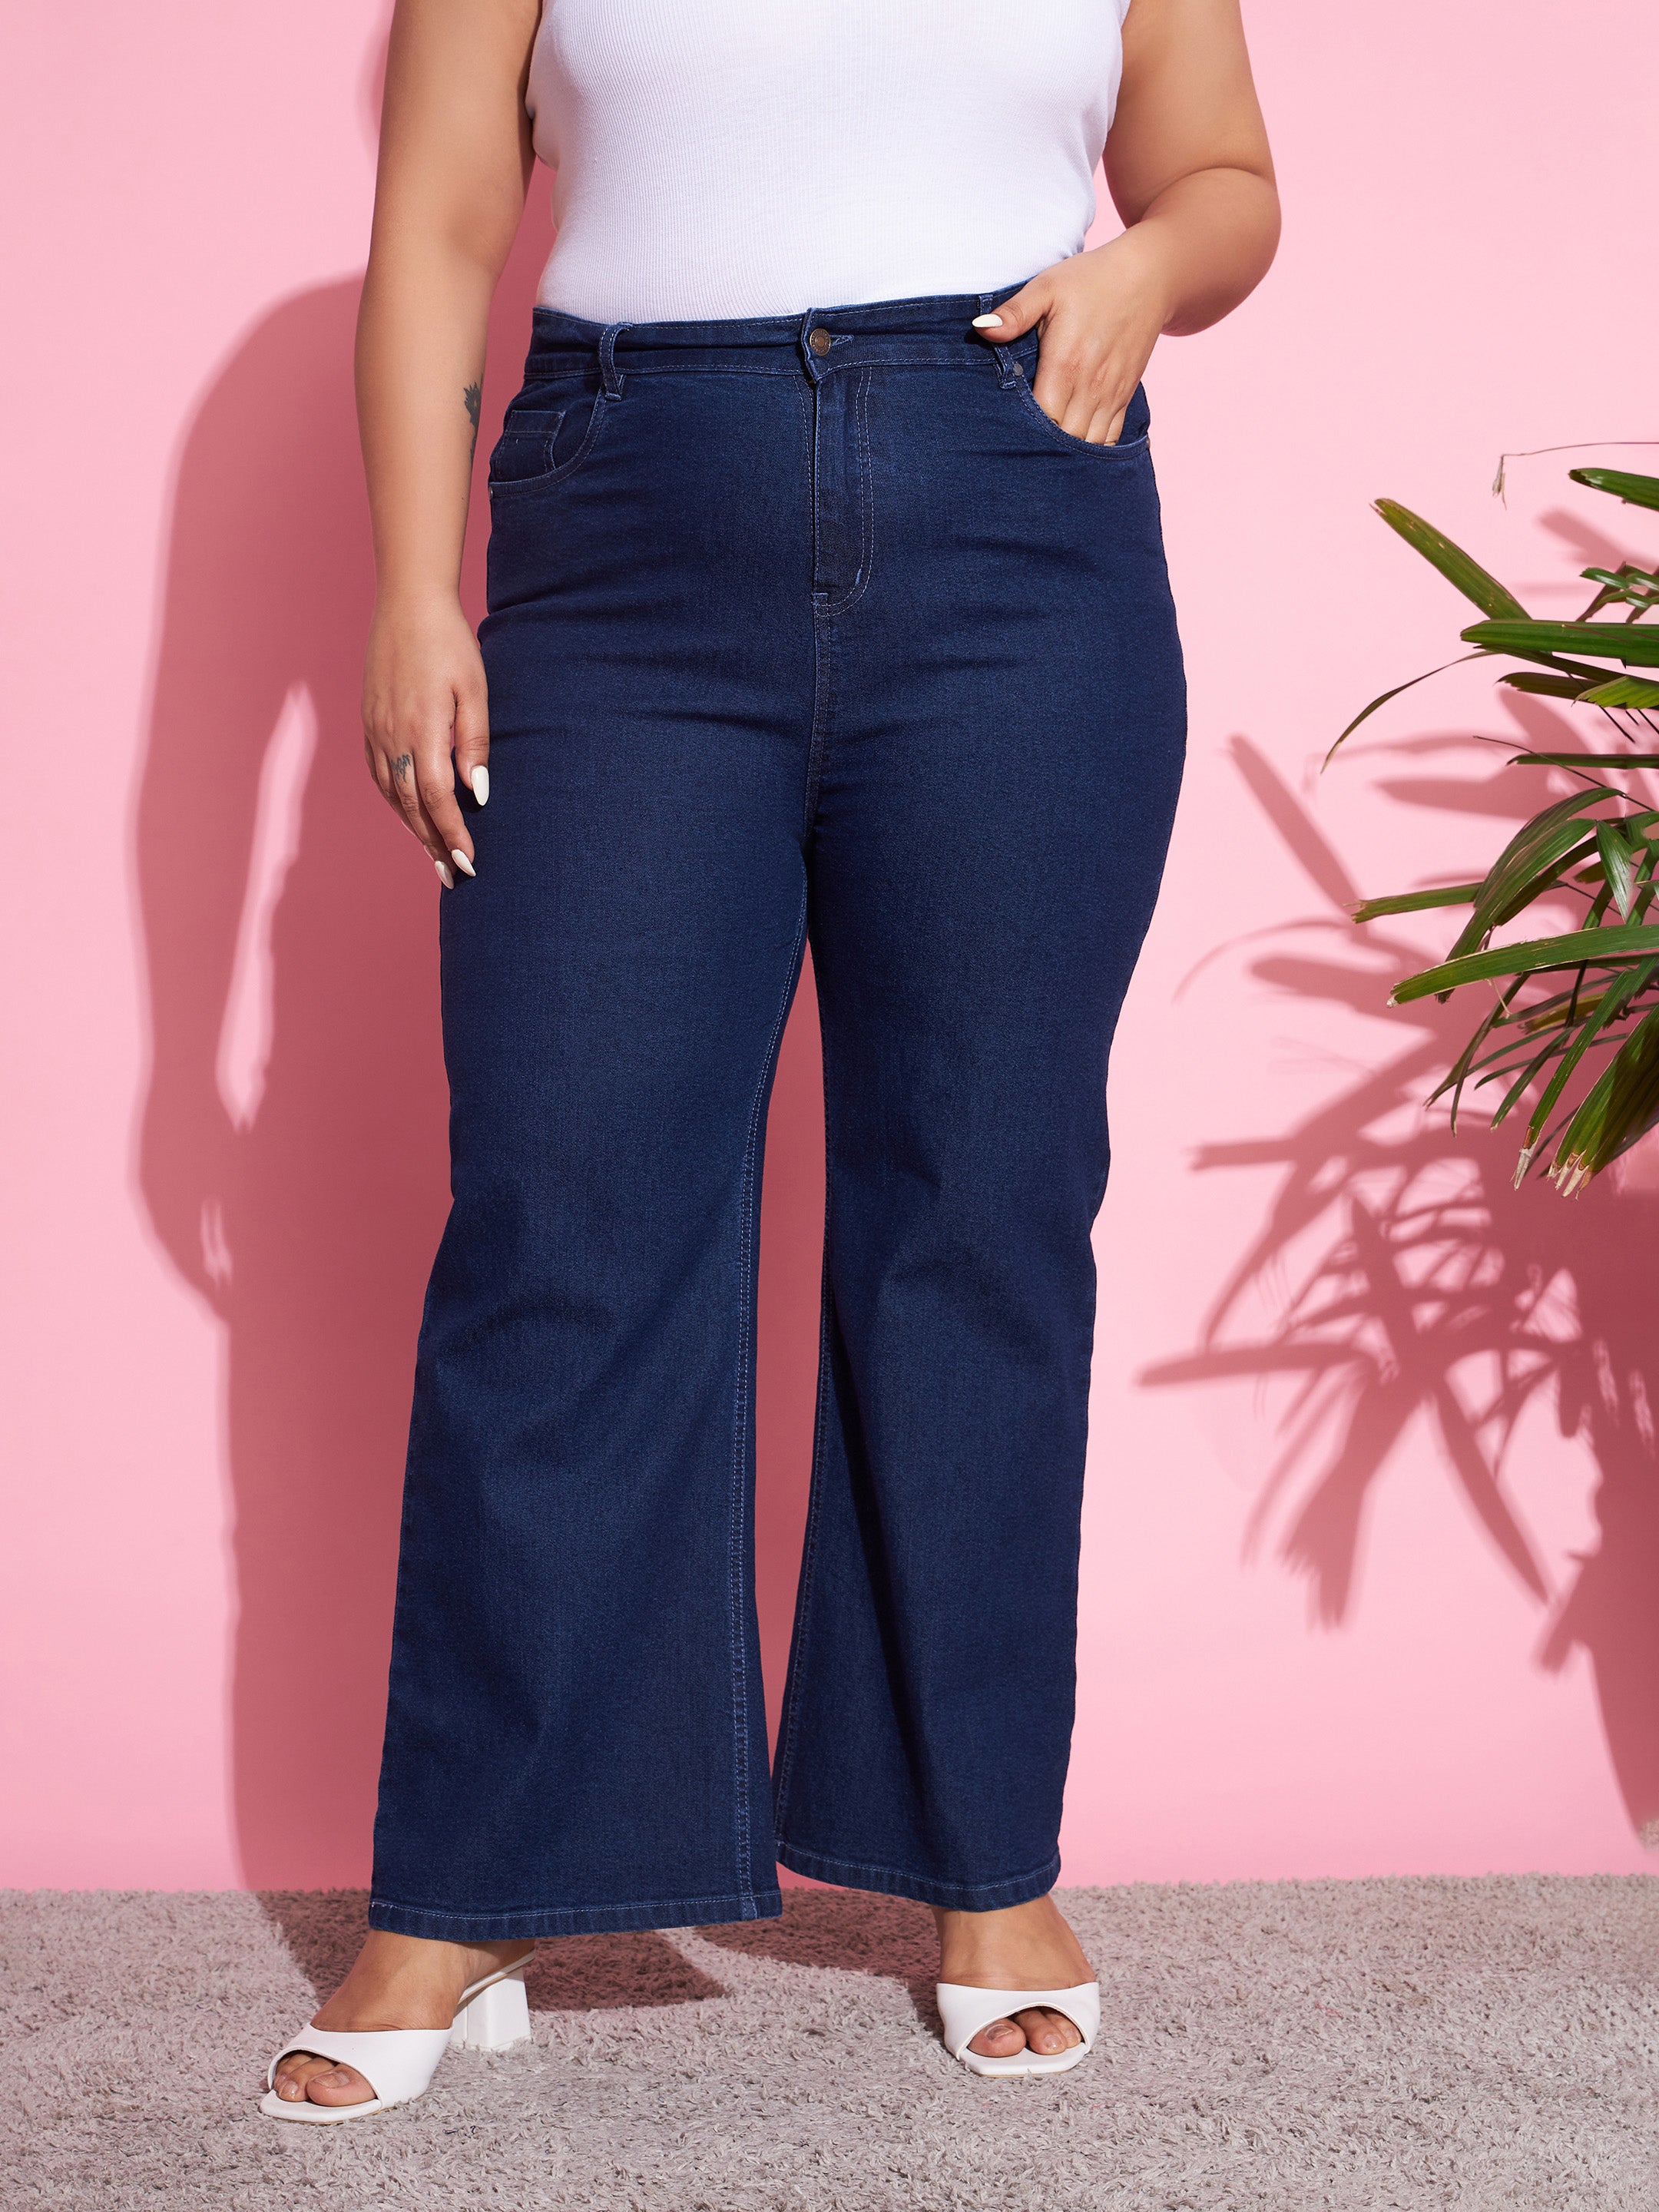 Women's Navy Wash Denim Bell Bottom Jeans - SASSAFRAS